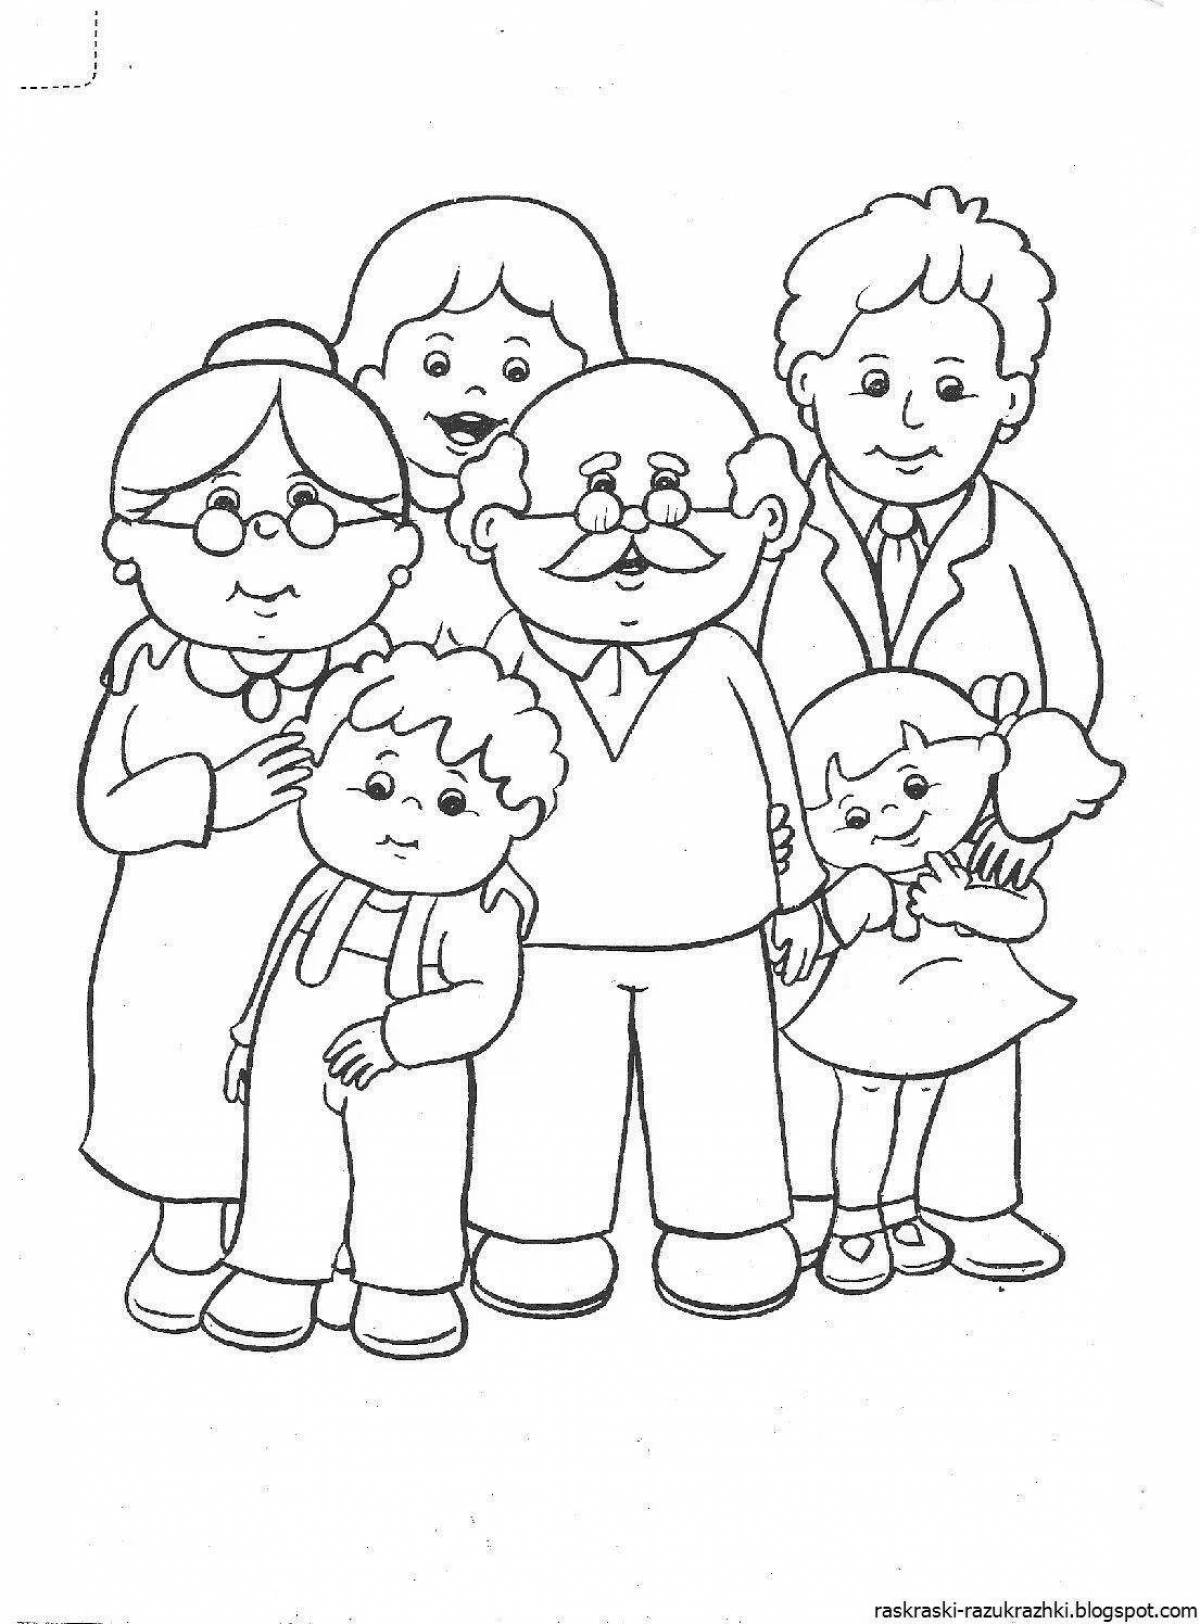 Creative family coloring book